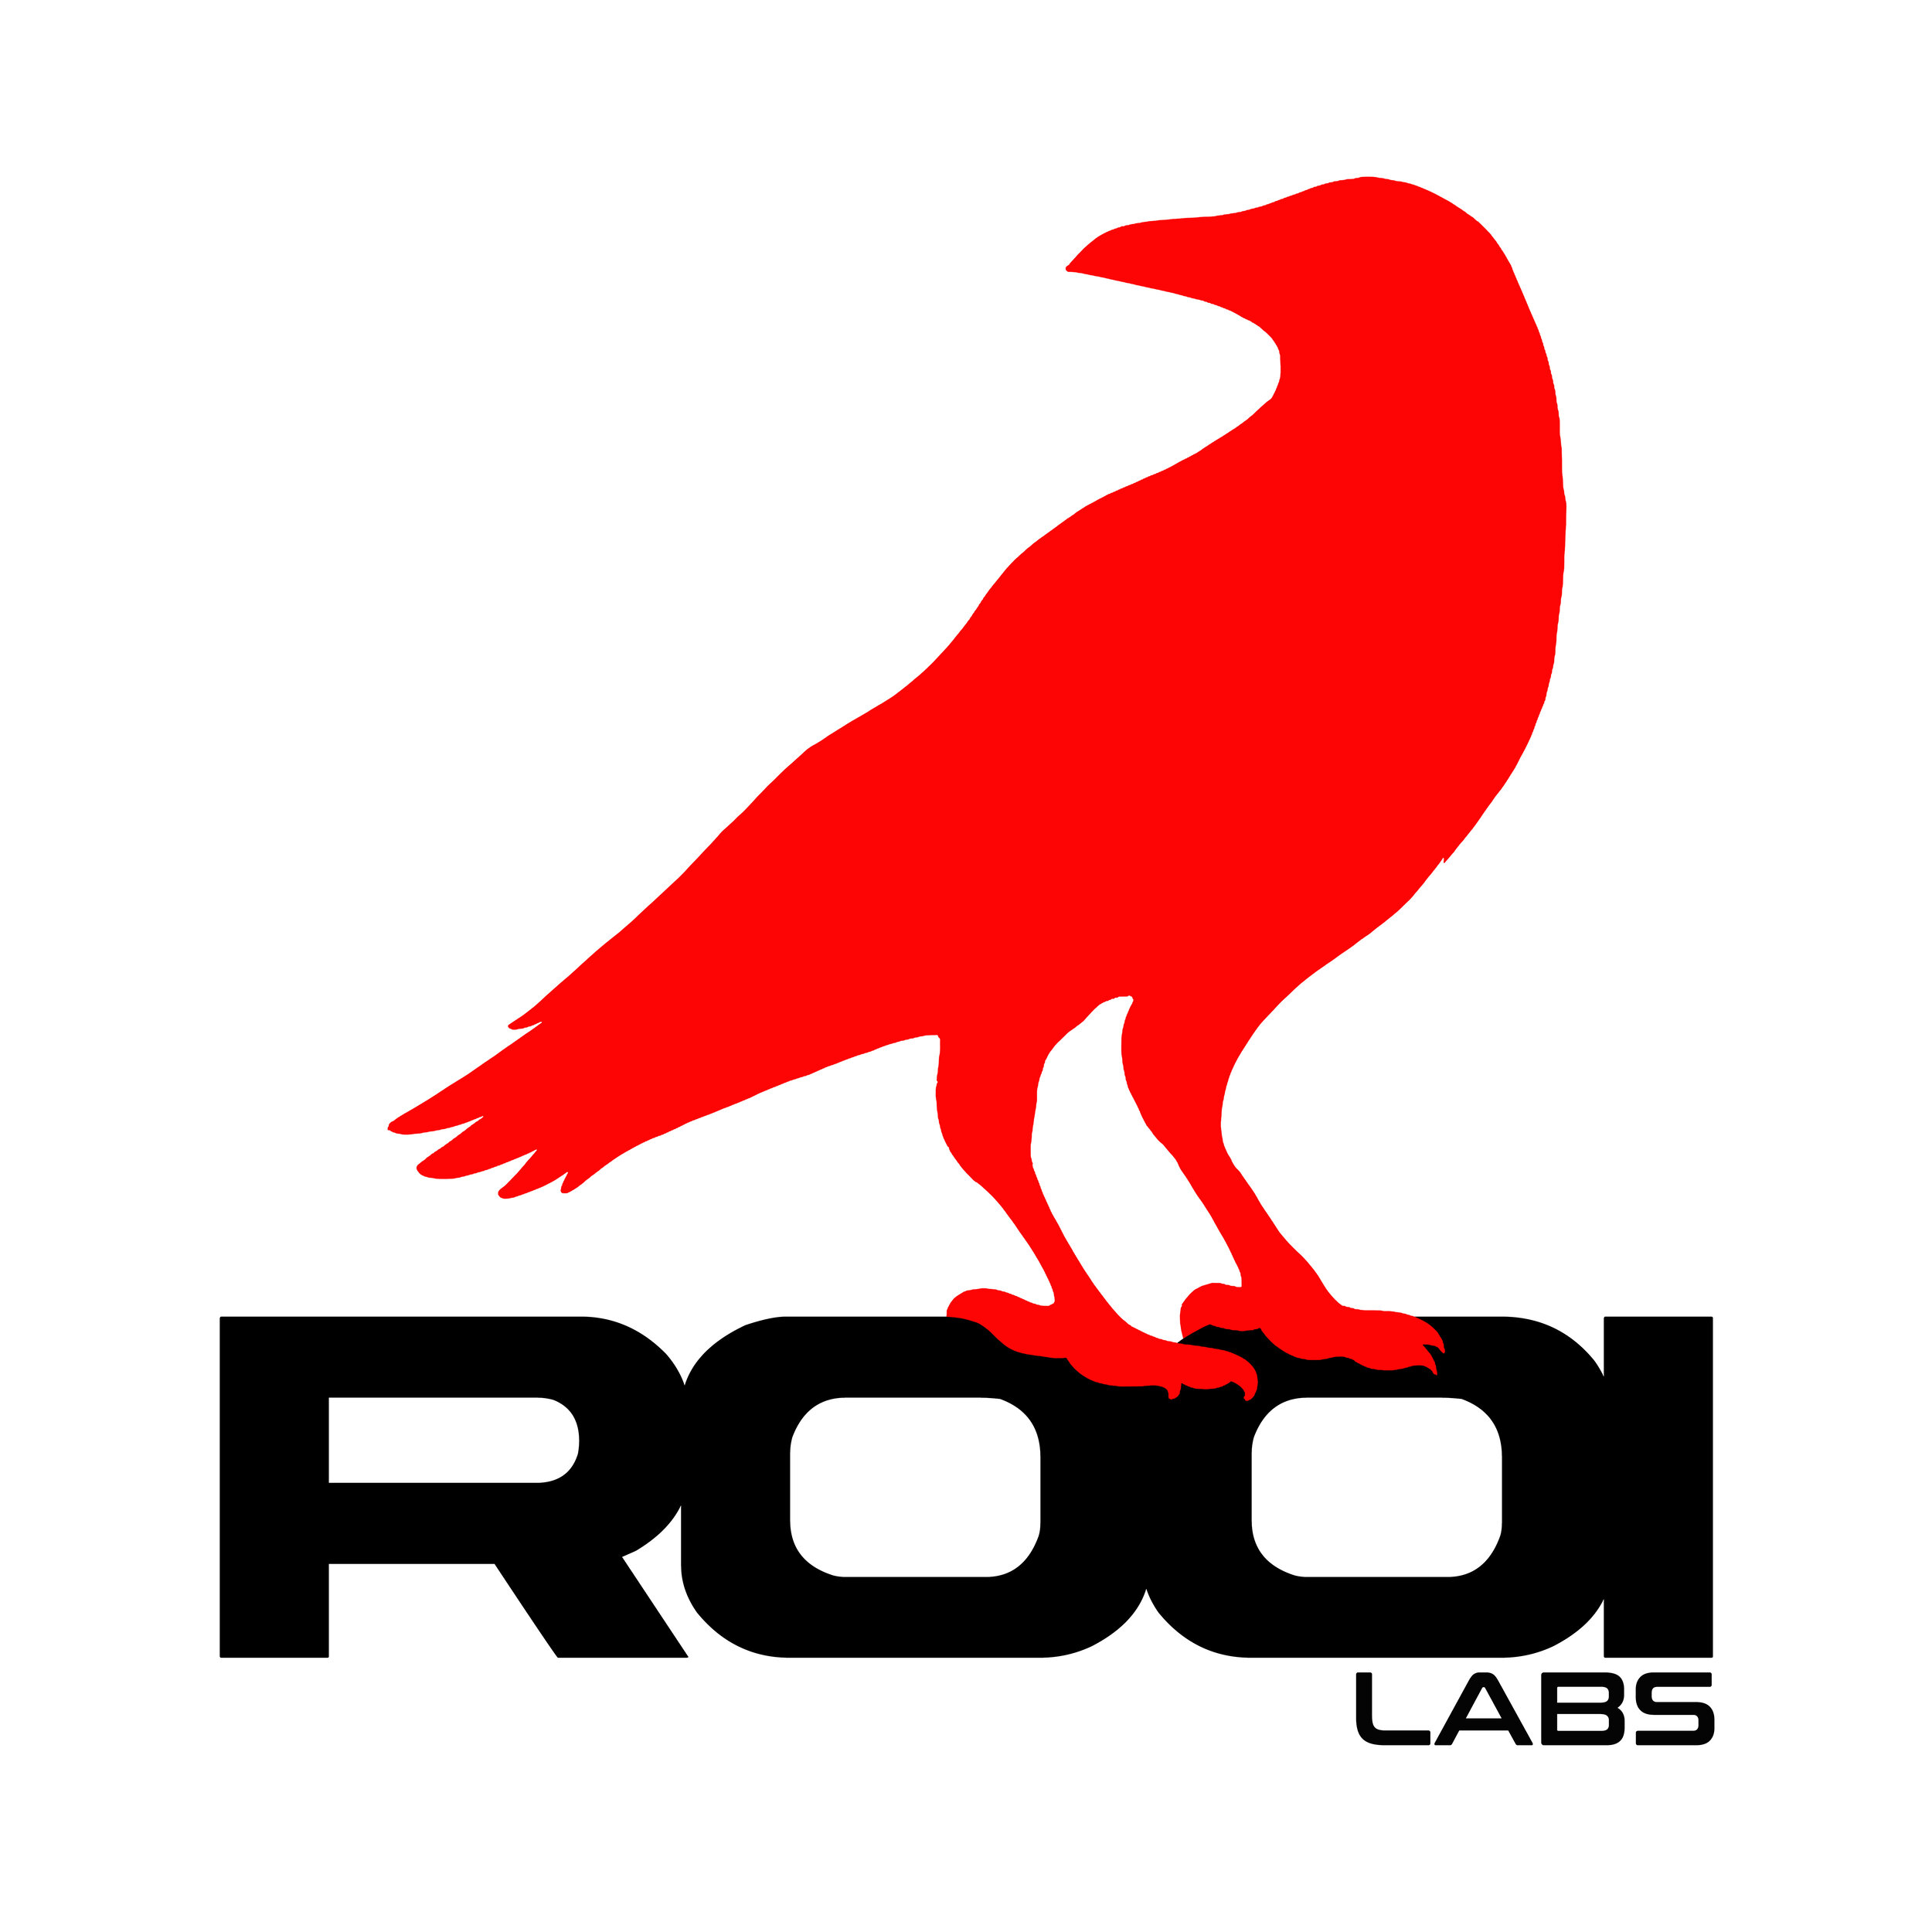 ROOI labs logo.jpg